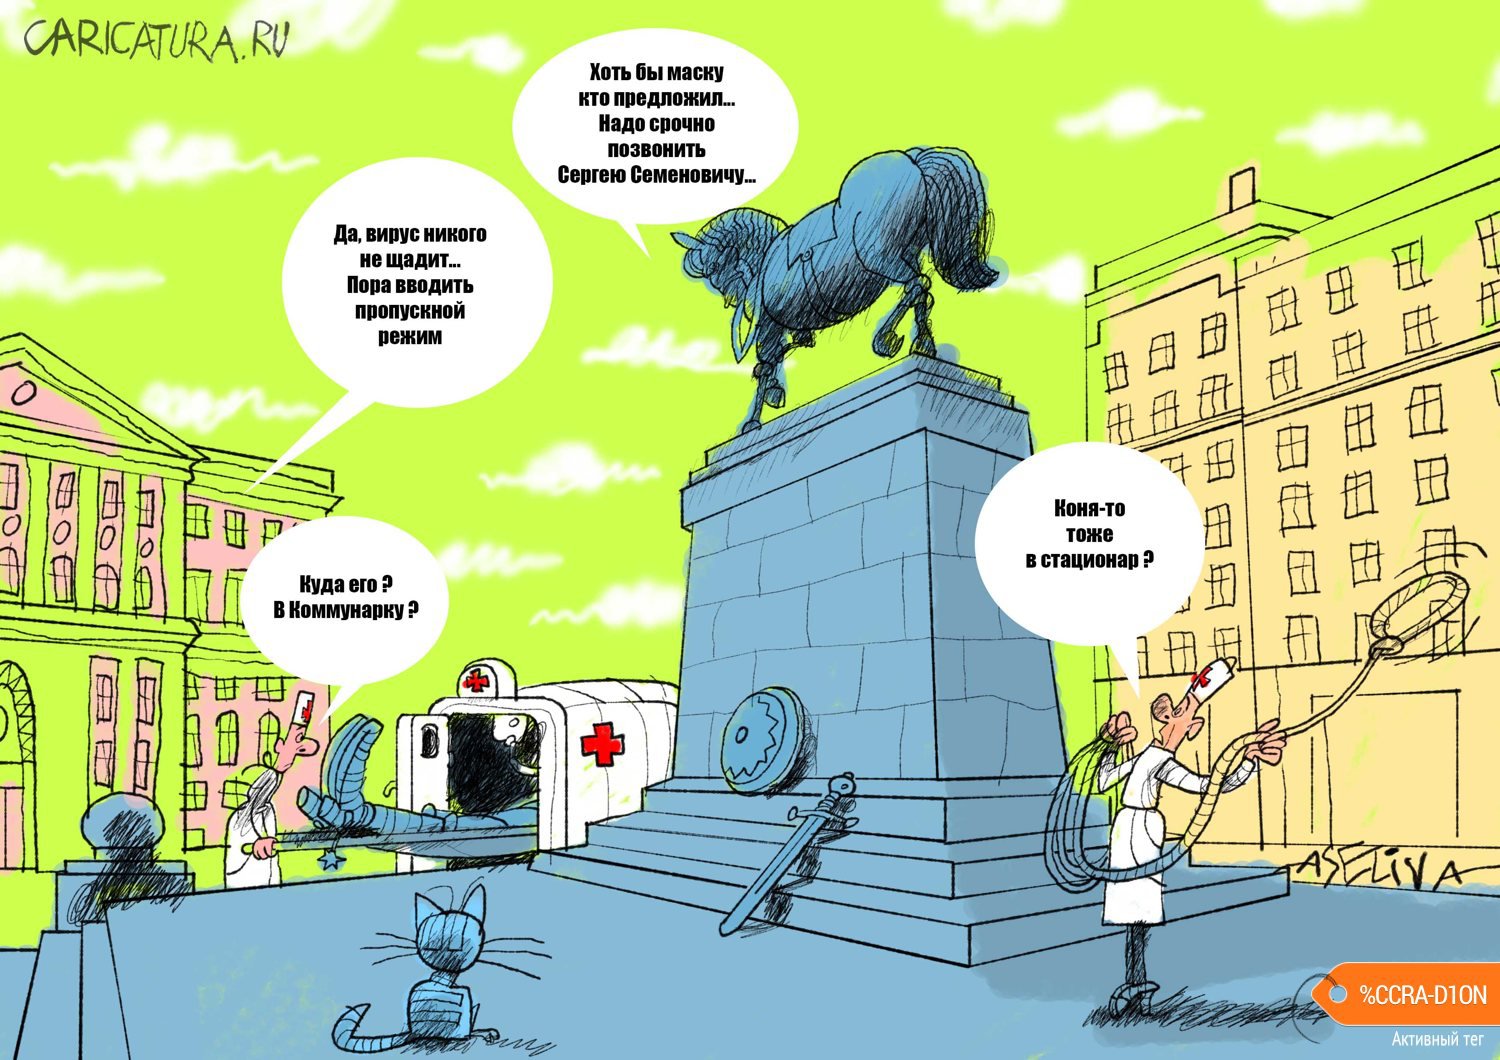 Карикатура "Москва. Пропускной режим. Коронавирус", Андрей Селиванов